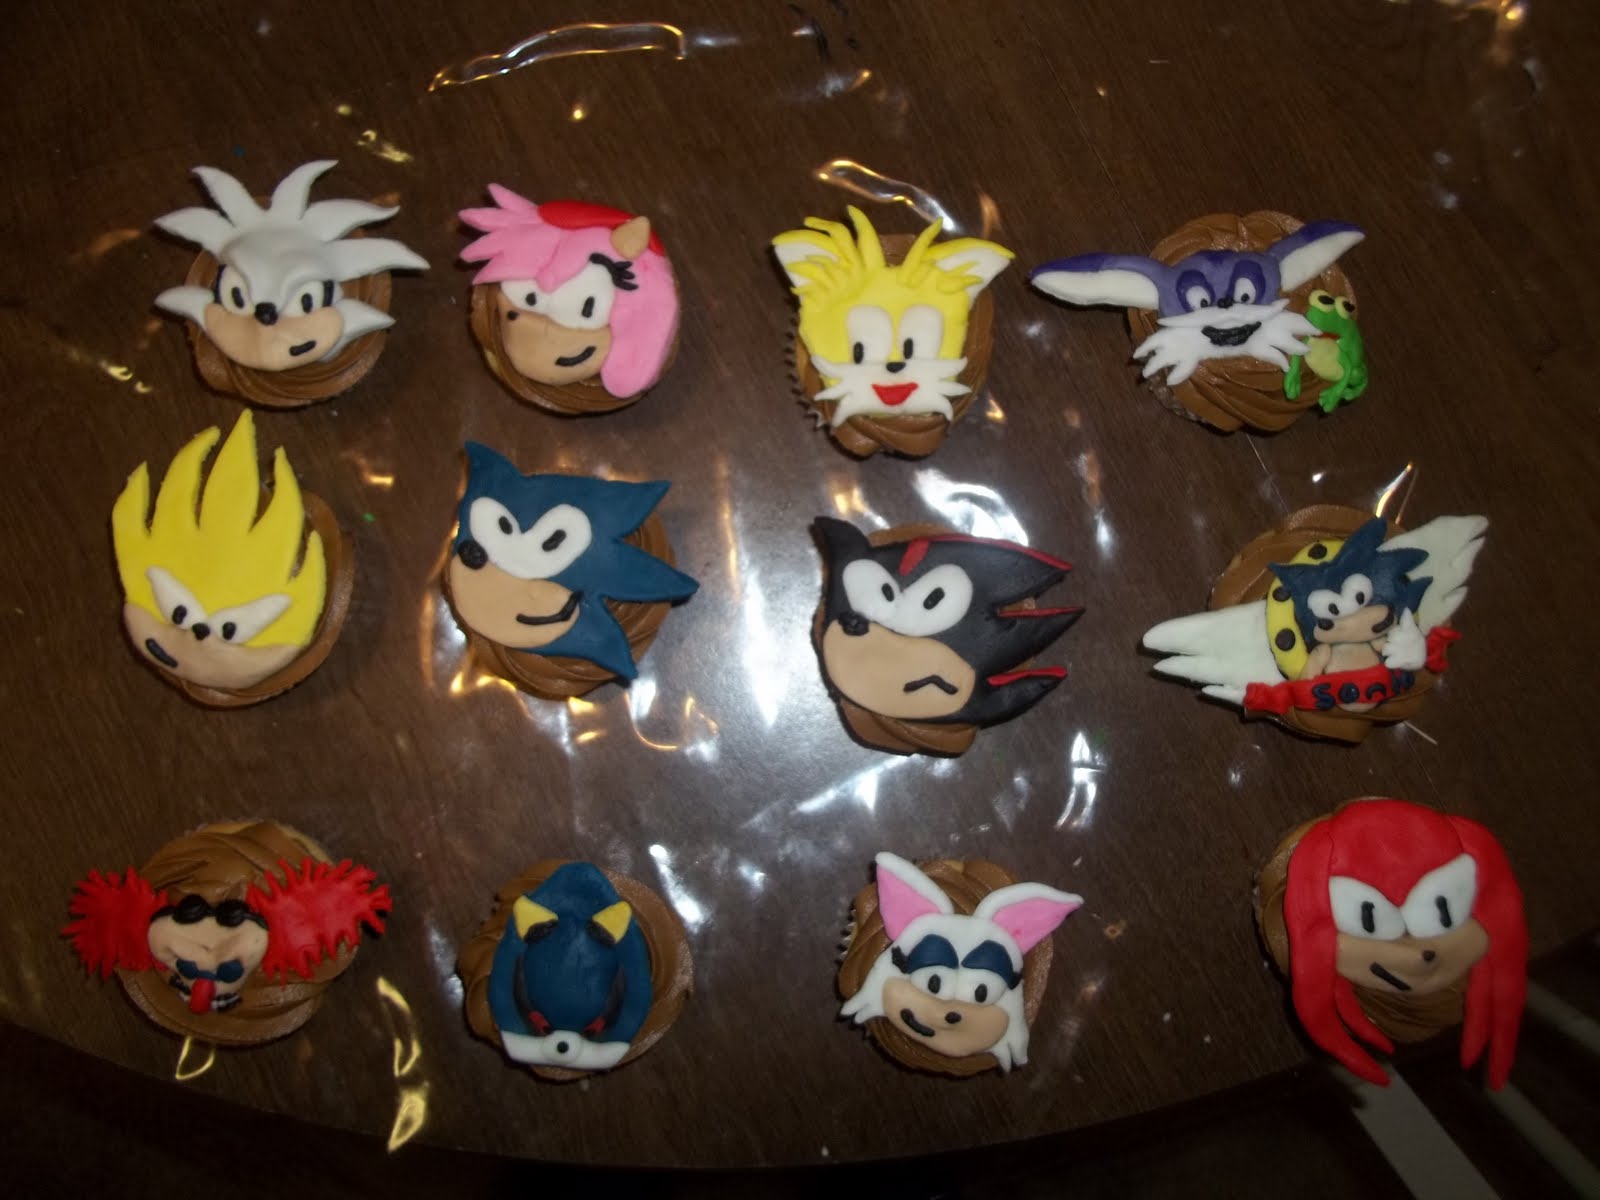 Sonic Hedgehog Cupcakes